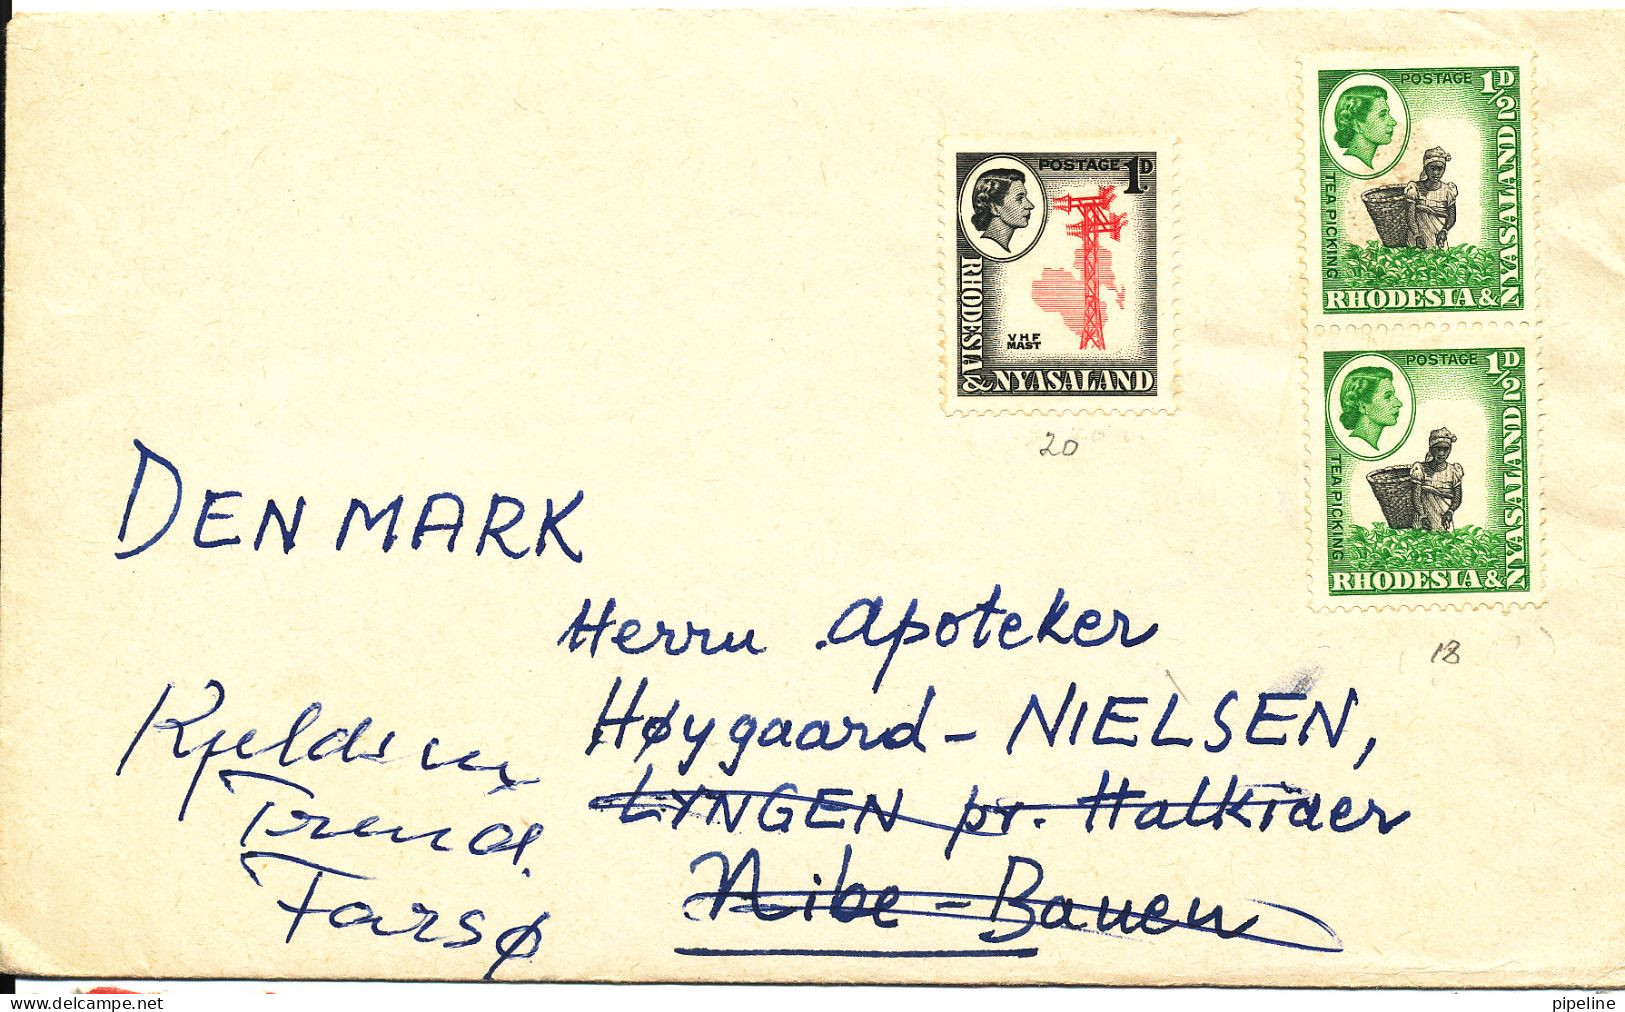 Rhodesia & Nyasaland Cover Sent To Denmark No Postmarks But Answer 31-12-1961 - Rhodesia & Nyasaland (1954-1963)